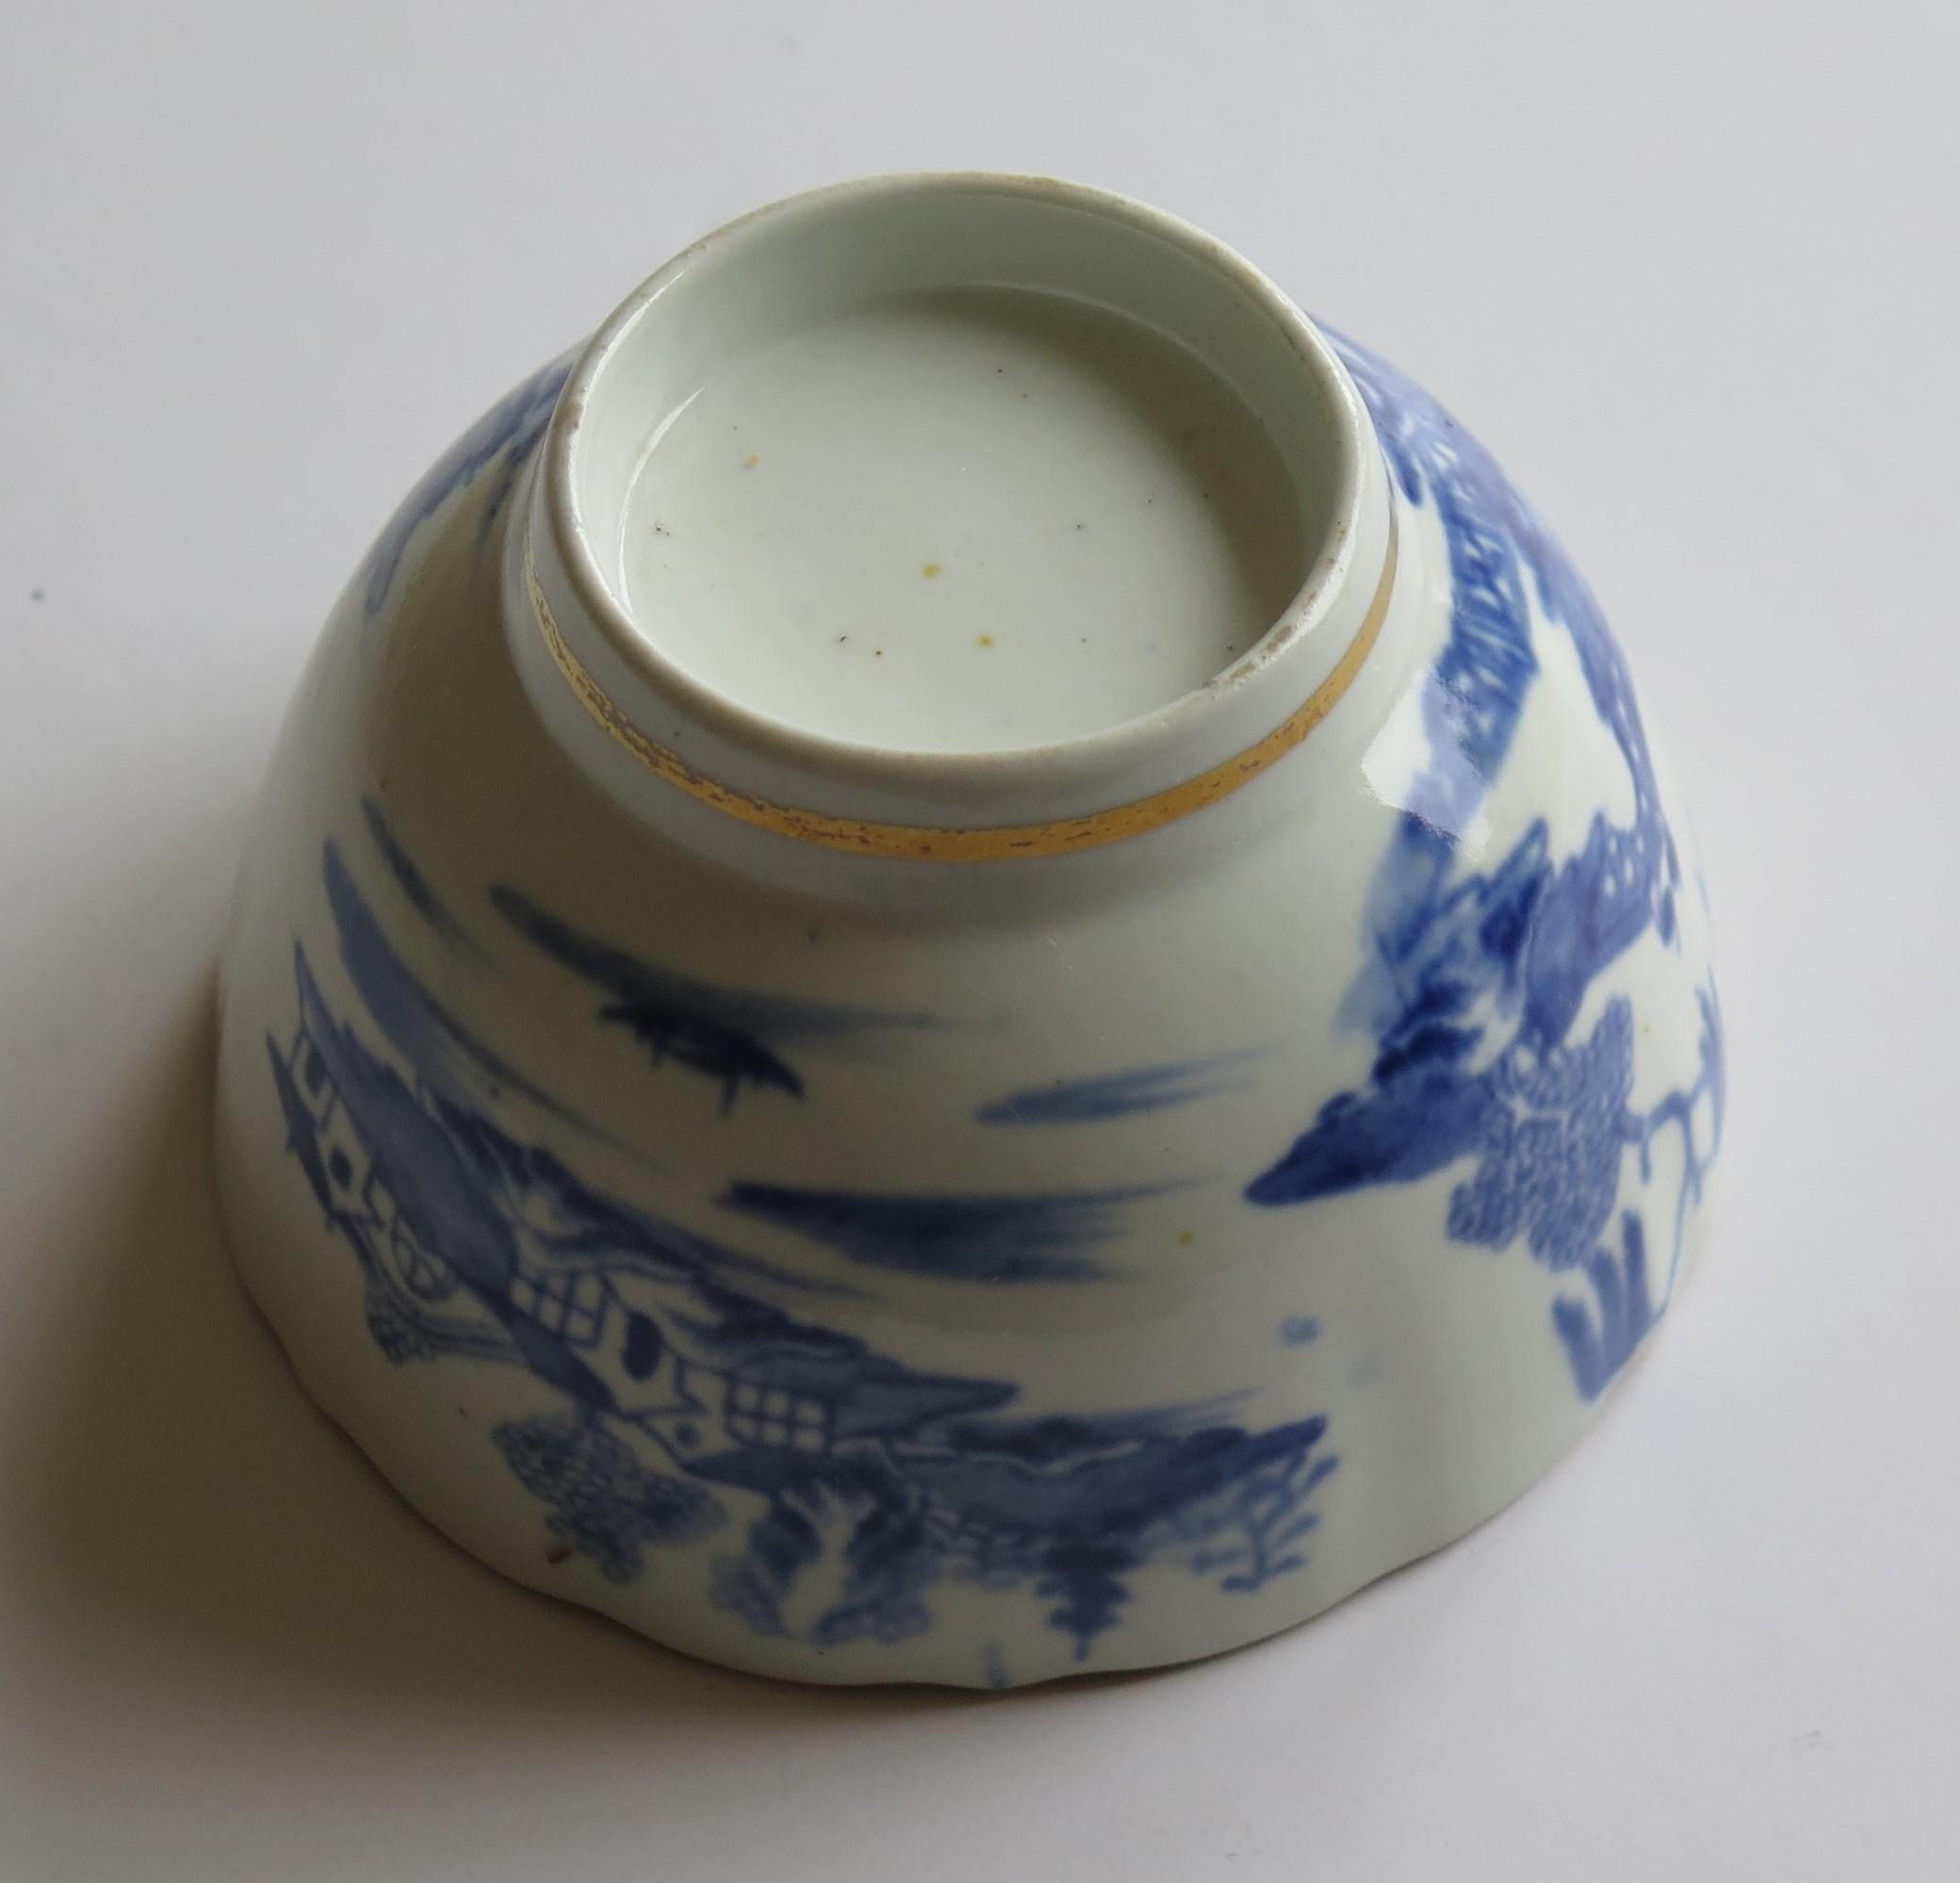 Miles Mason Porcelain Bowl Blue and White Pagoda Pattern, English, circa 1805 10